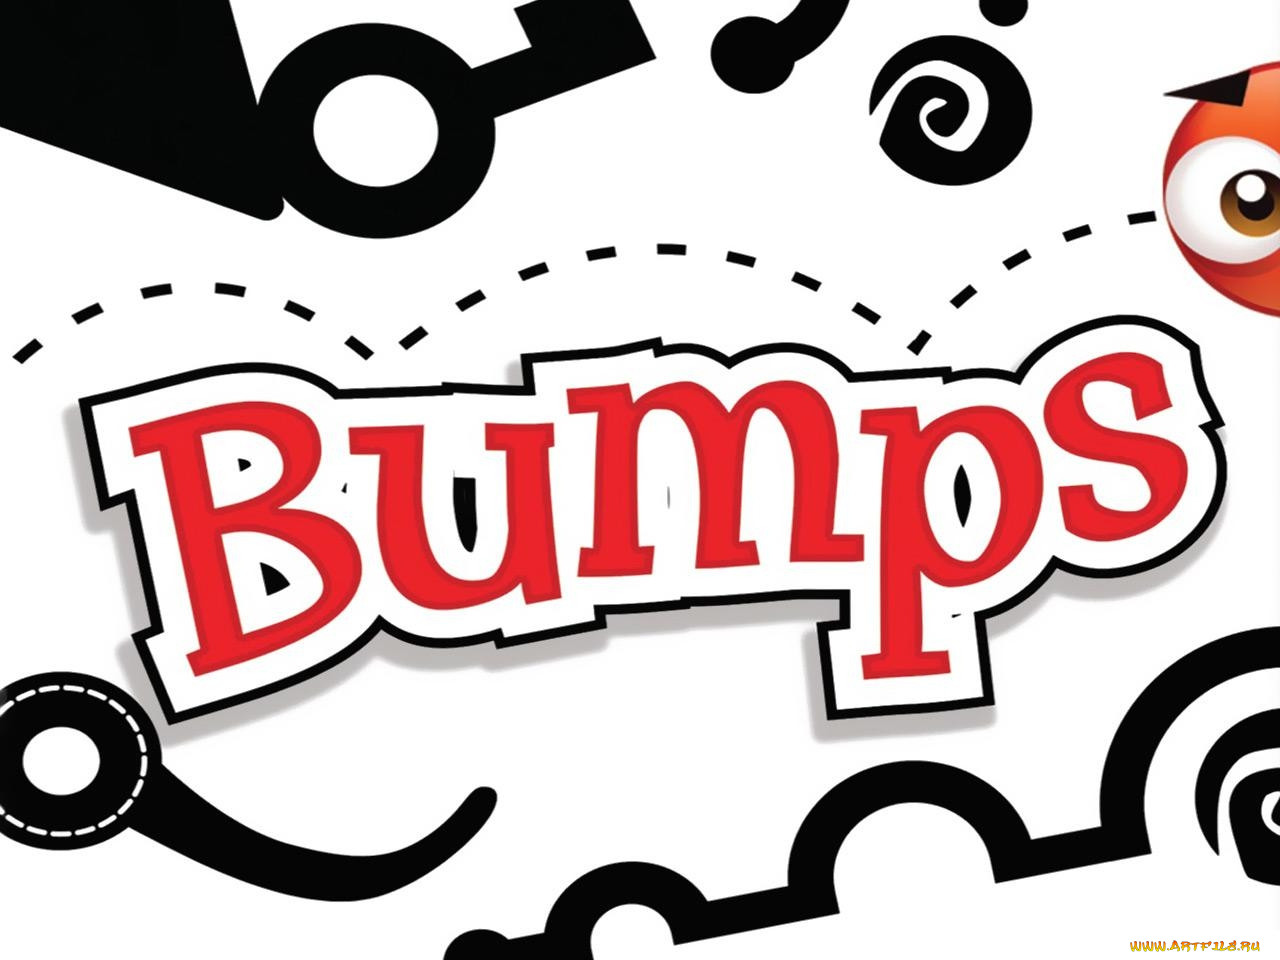 bumps, , 